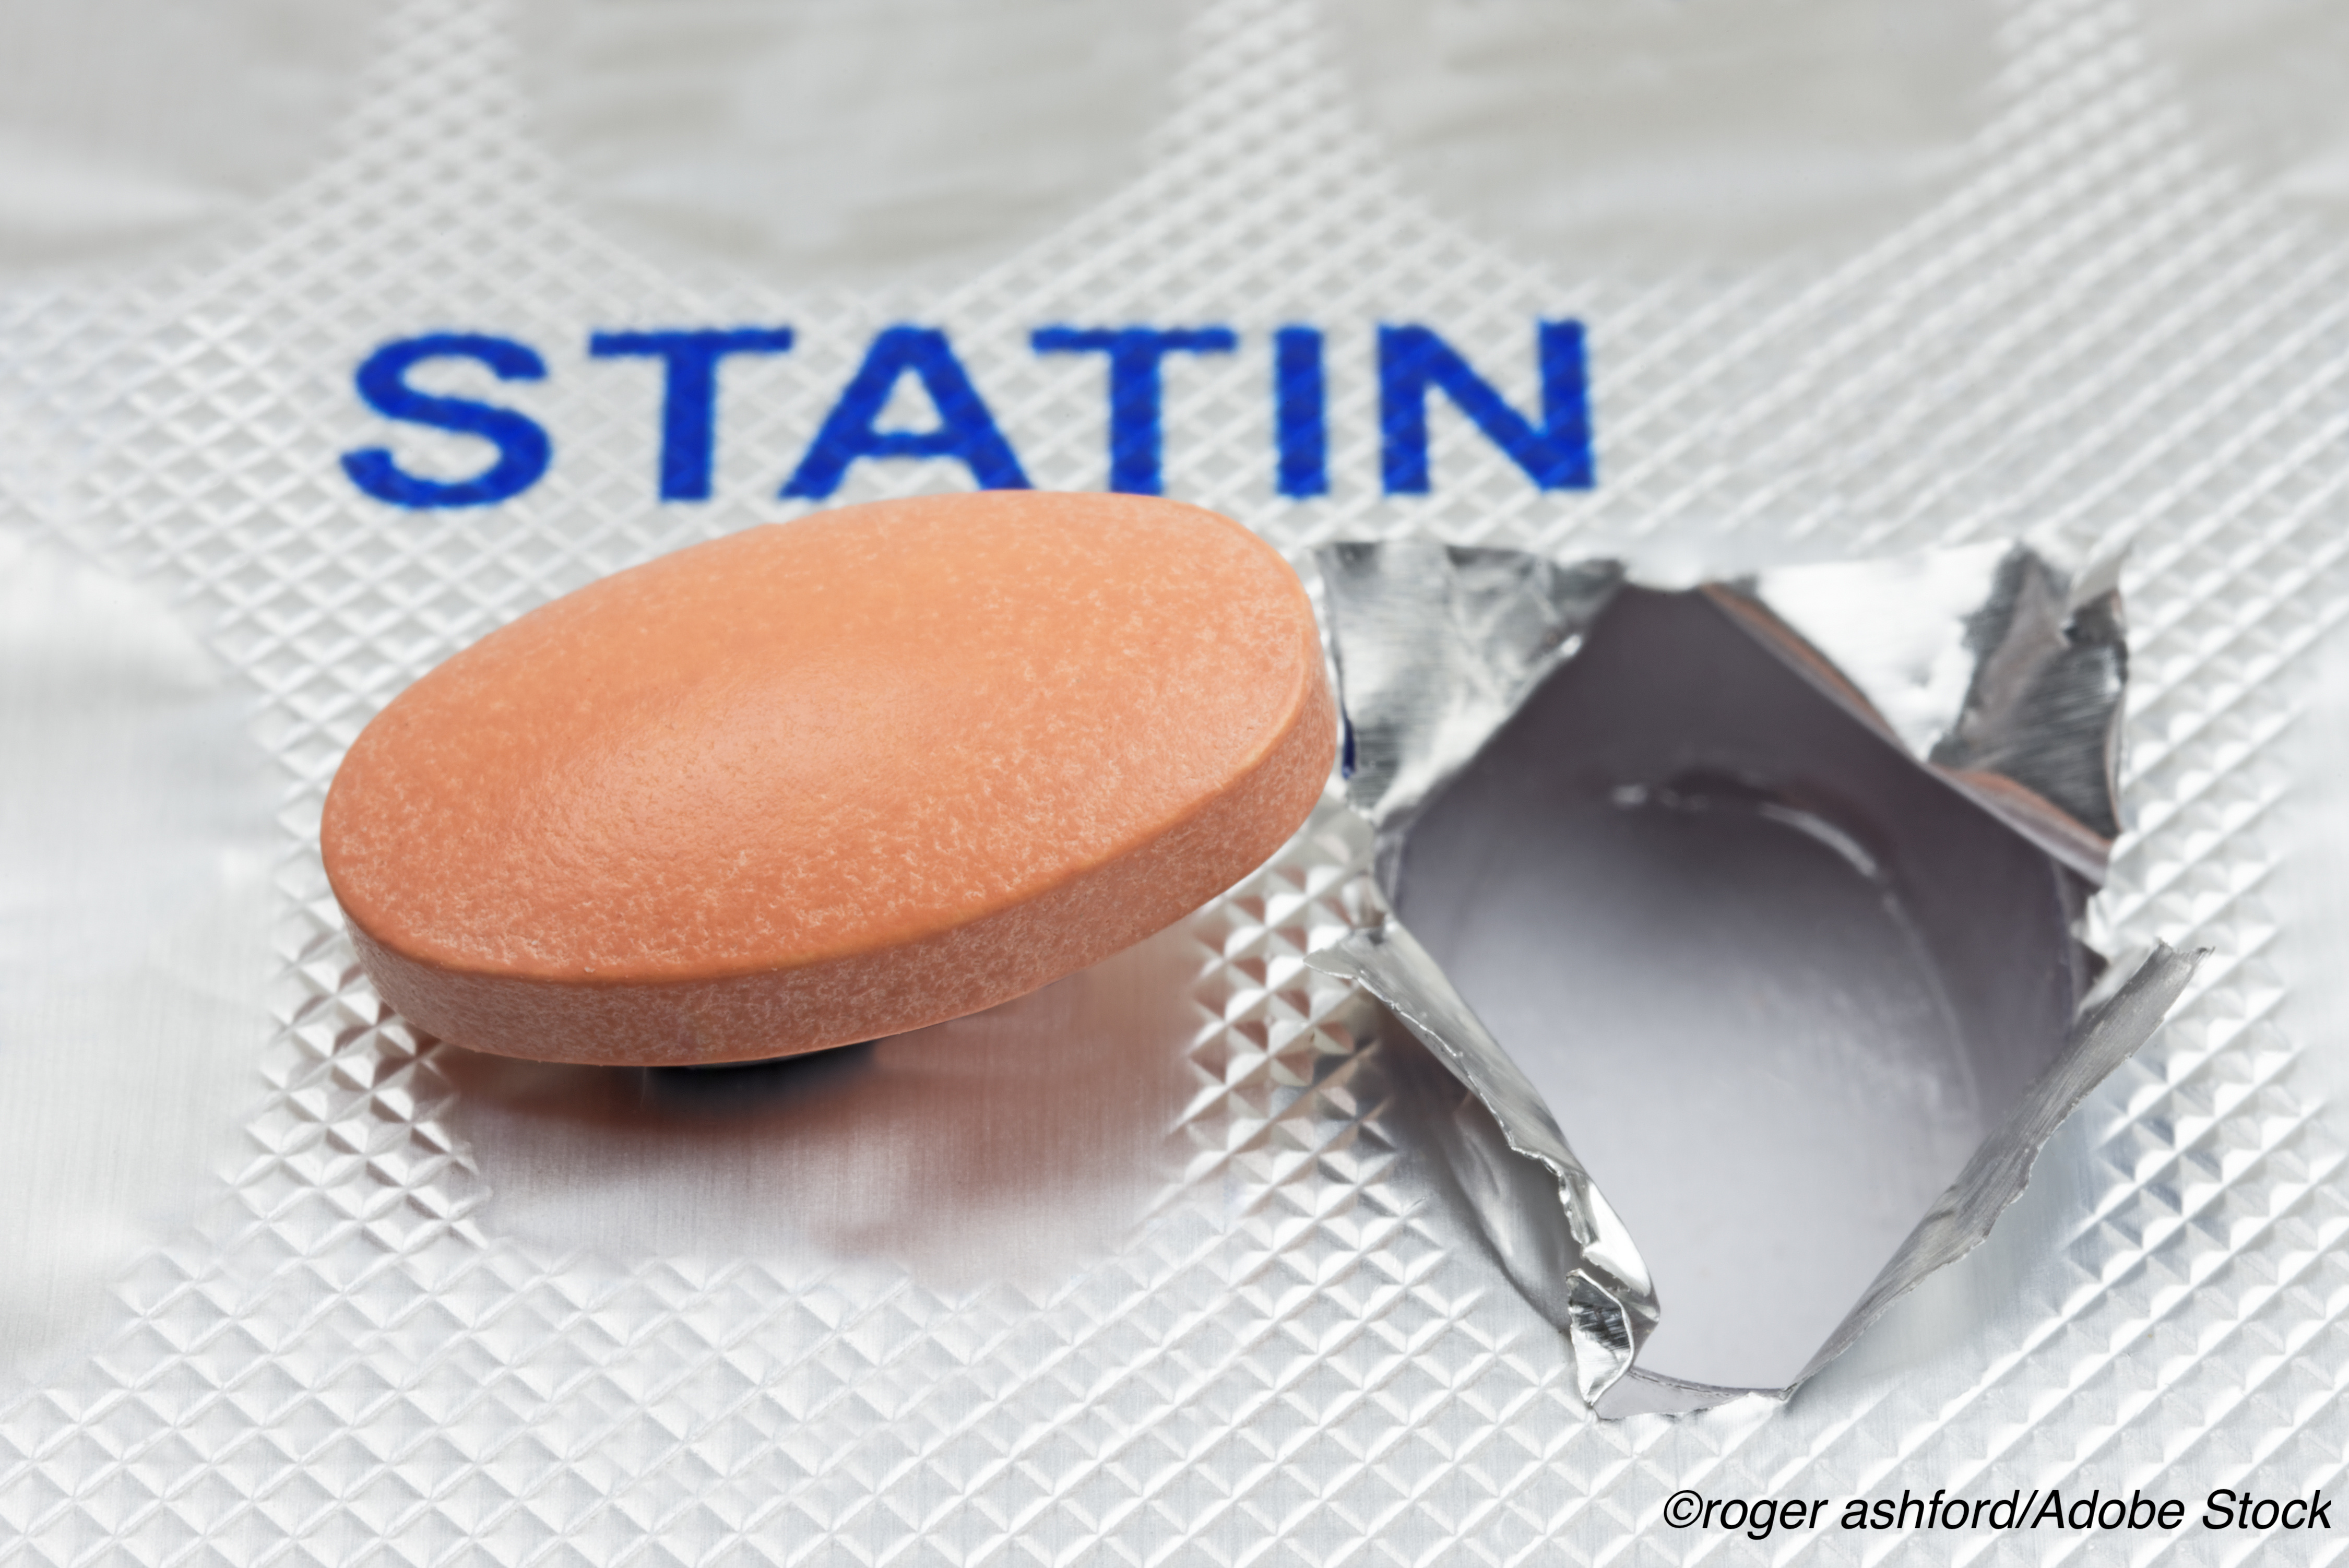 VA/DoD: Choose Moderate-Dose Statins for Managing Lipid Levels